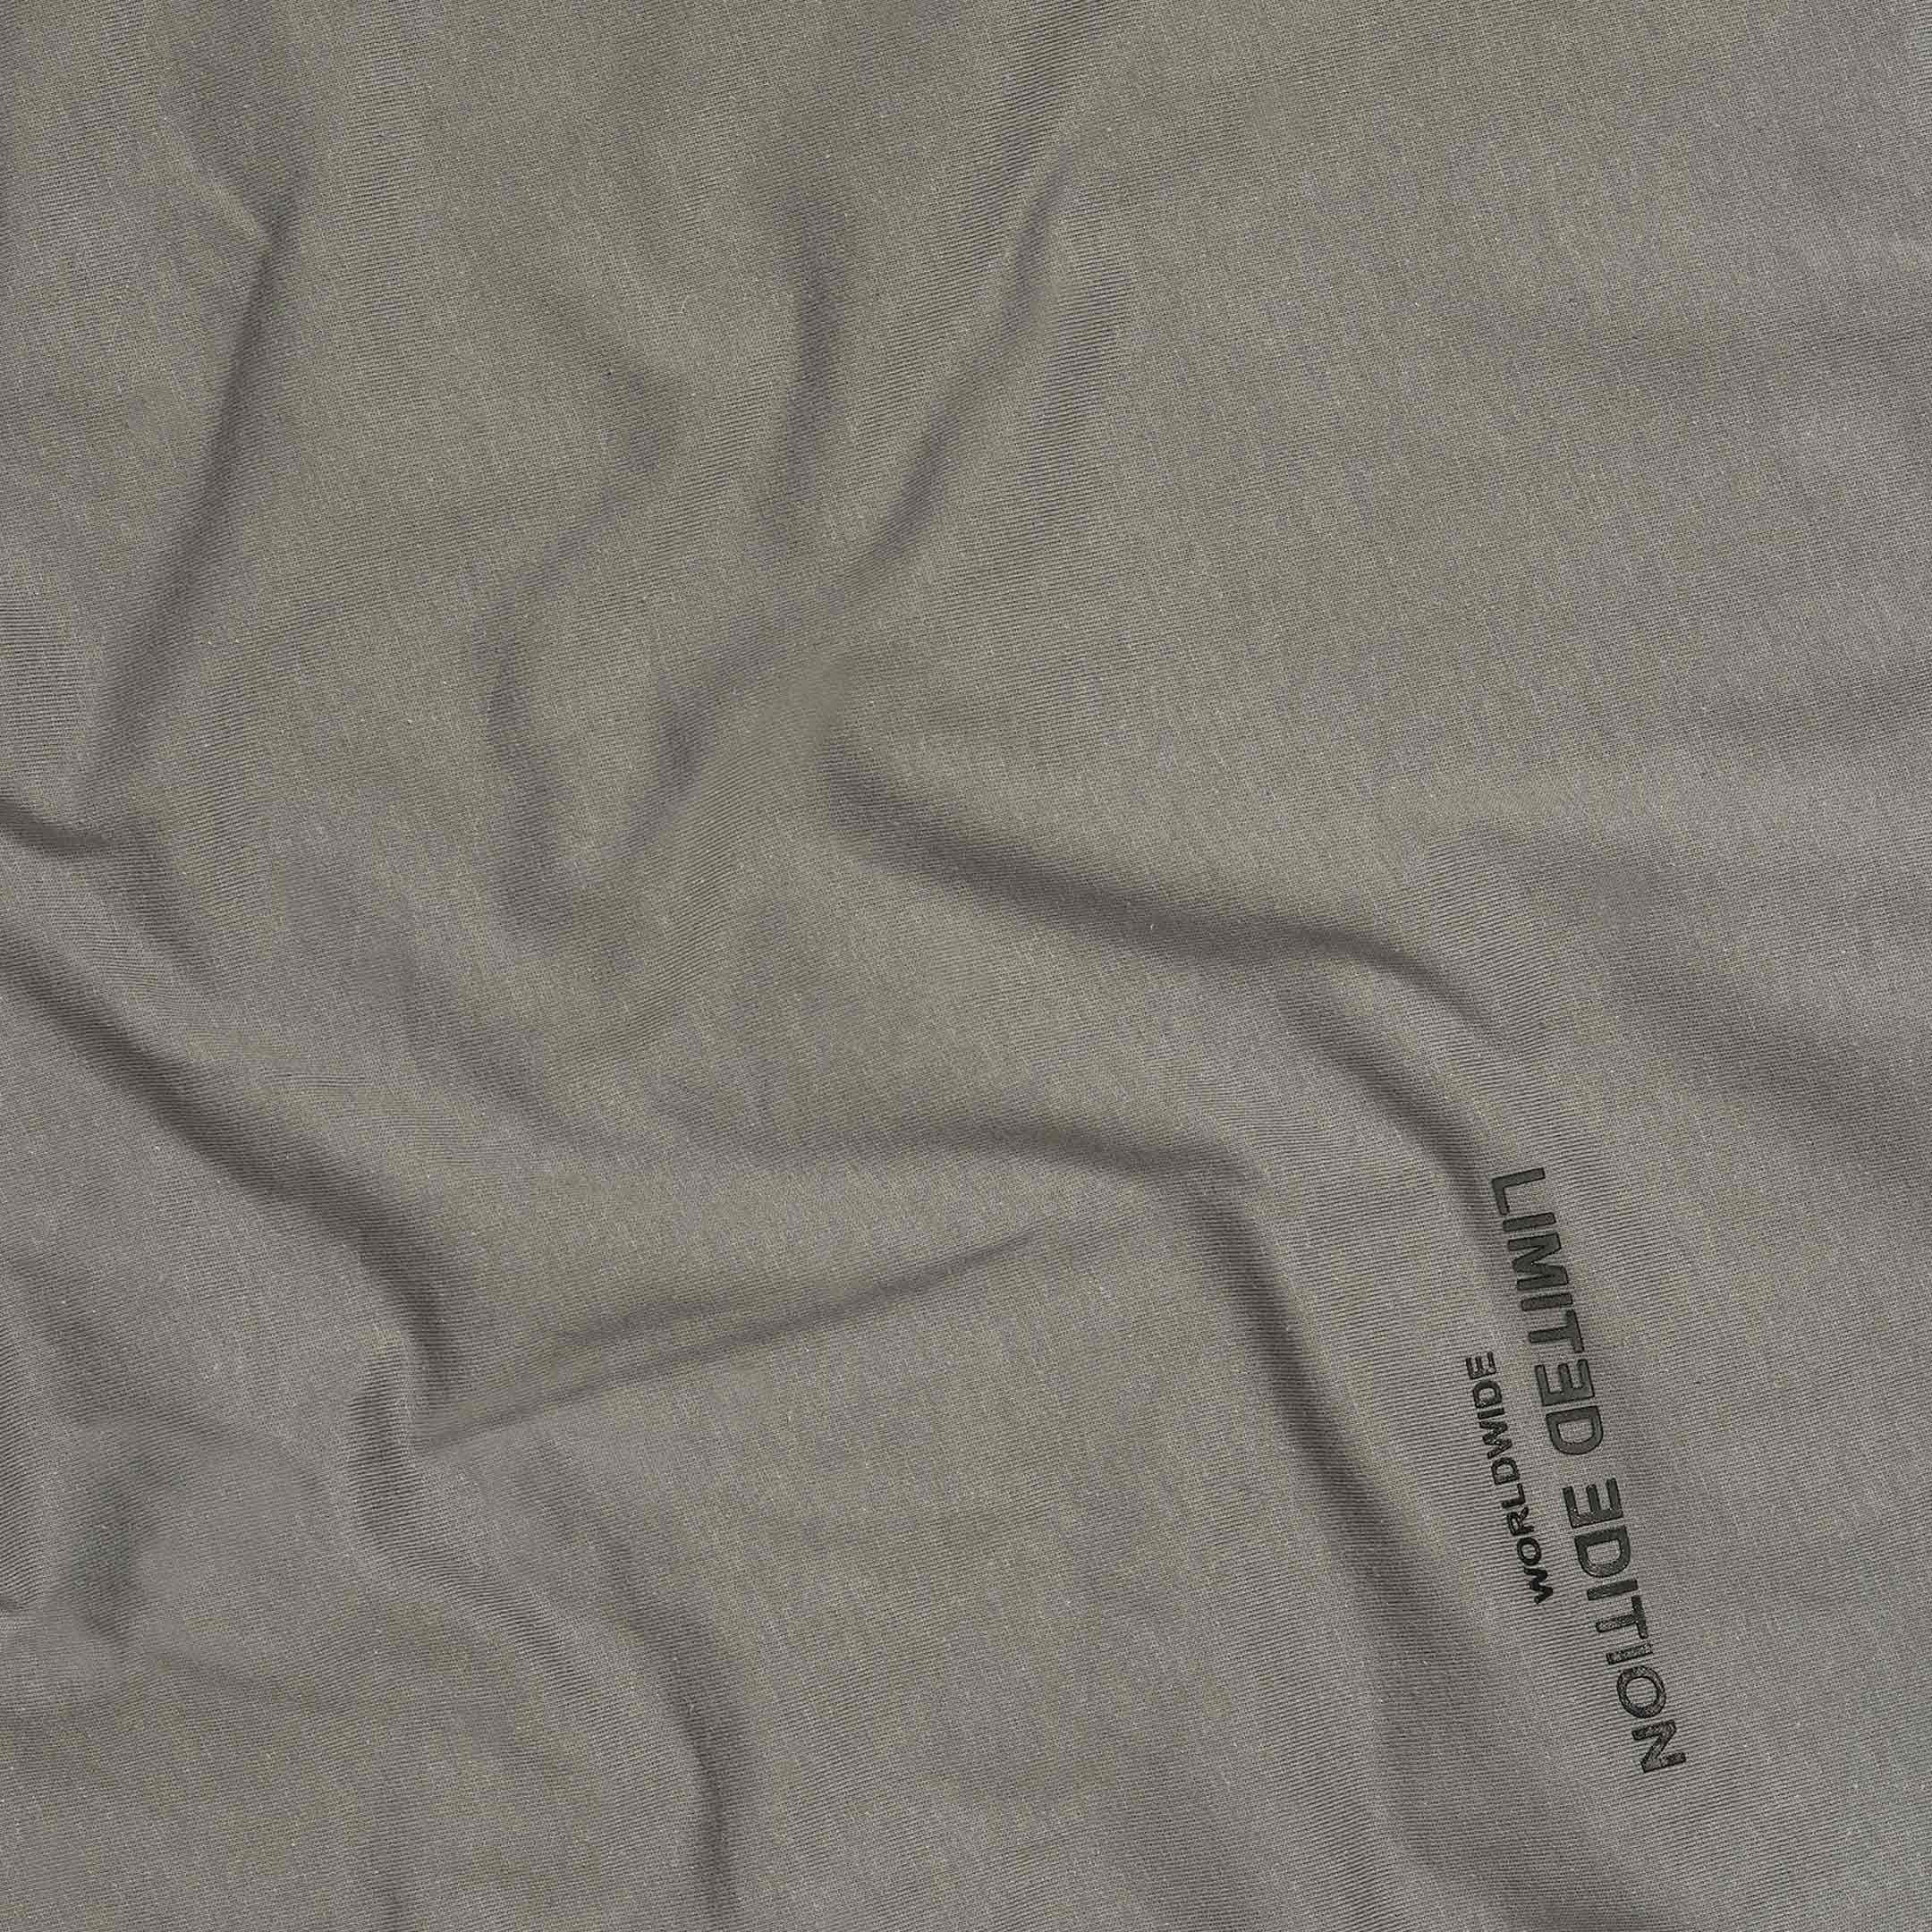 Boohoo Man T-Shirt Charcoal Limited Edition